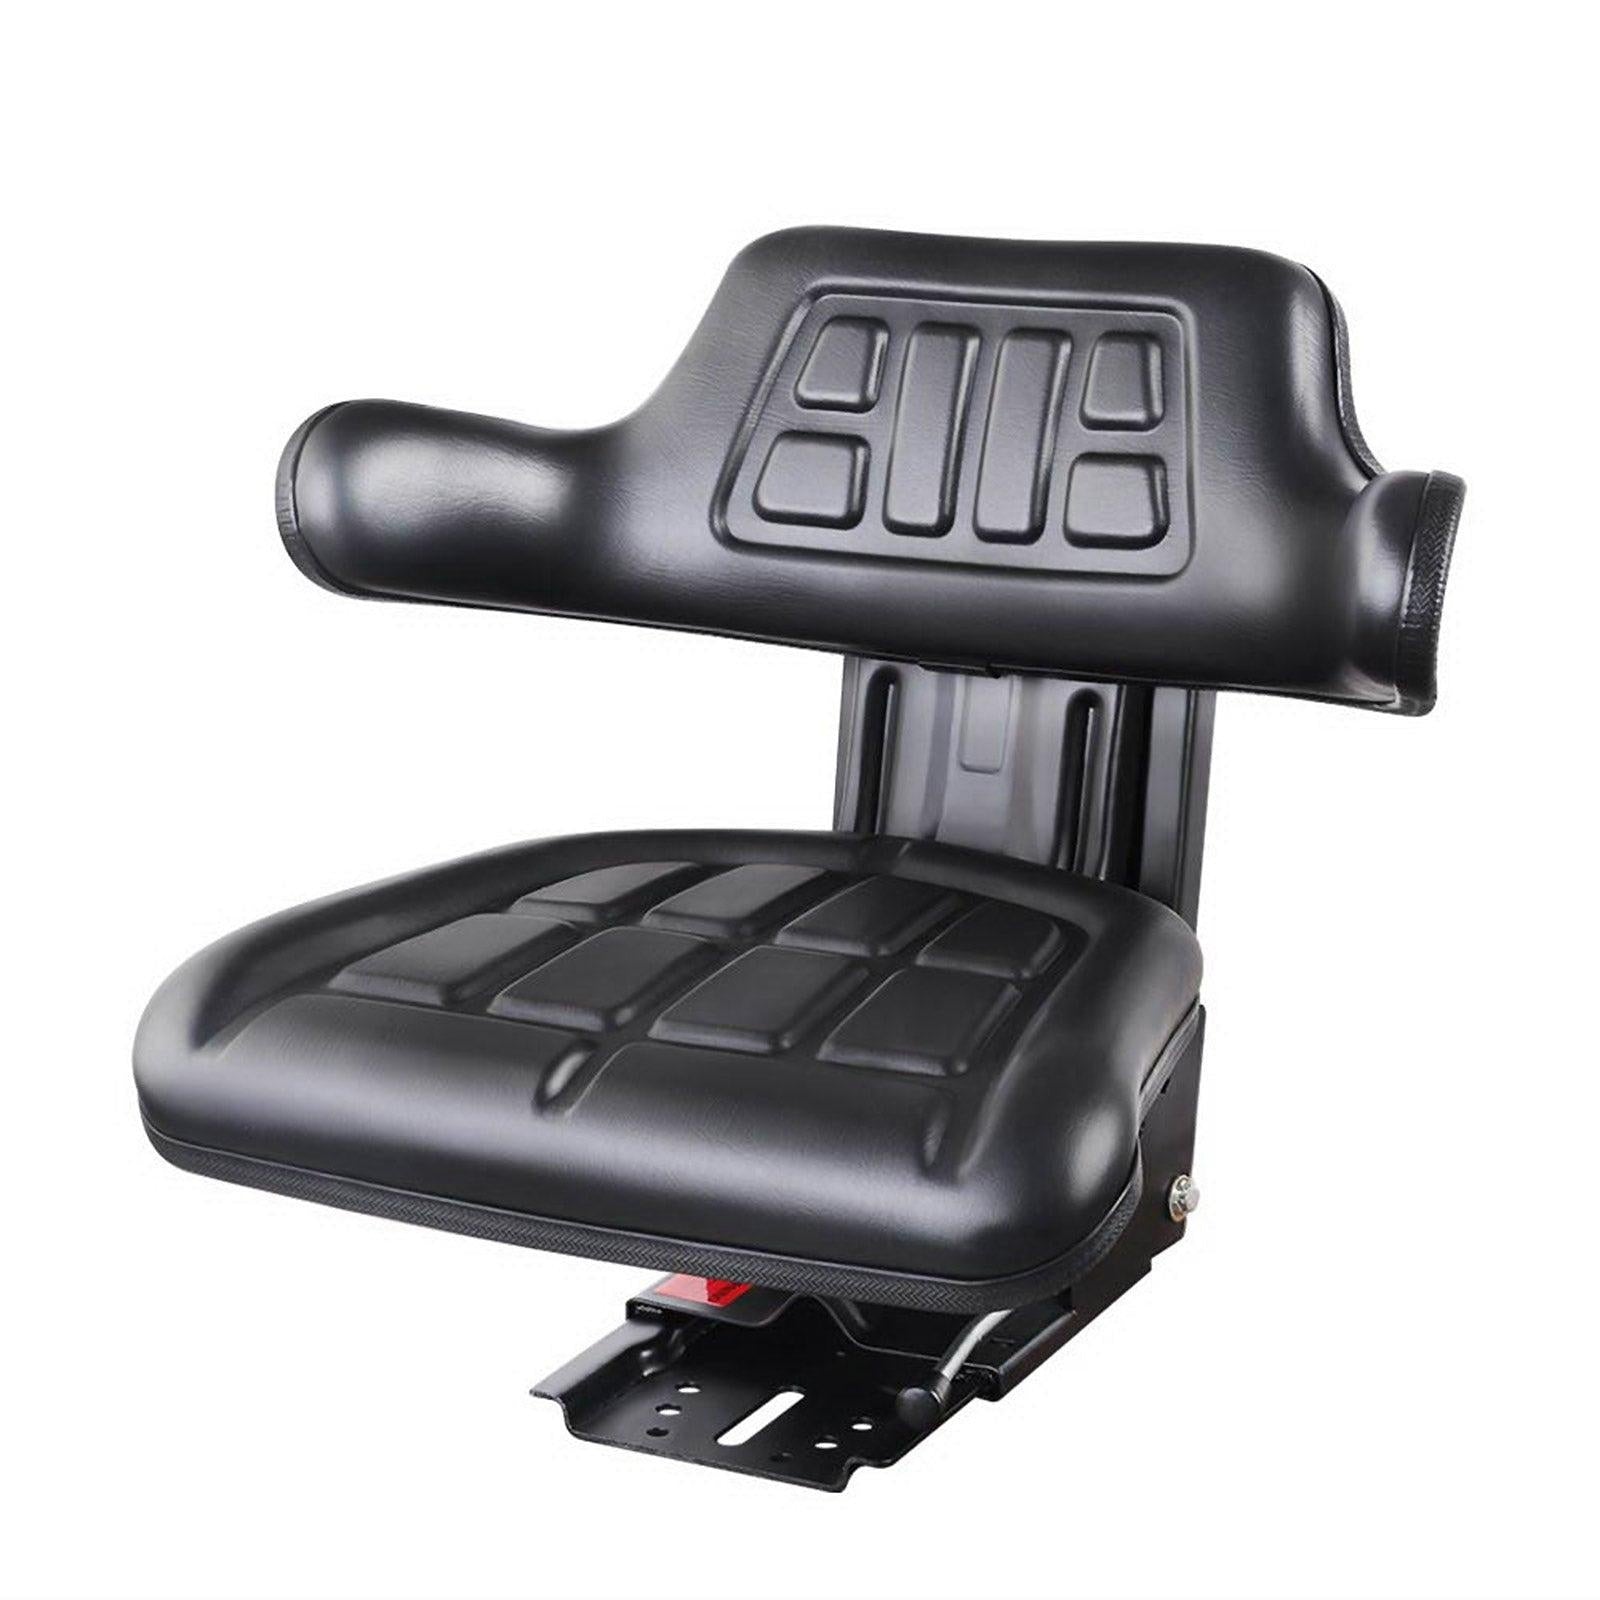 Giantz PU Leather Tractor Seat - Black Deals499